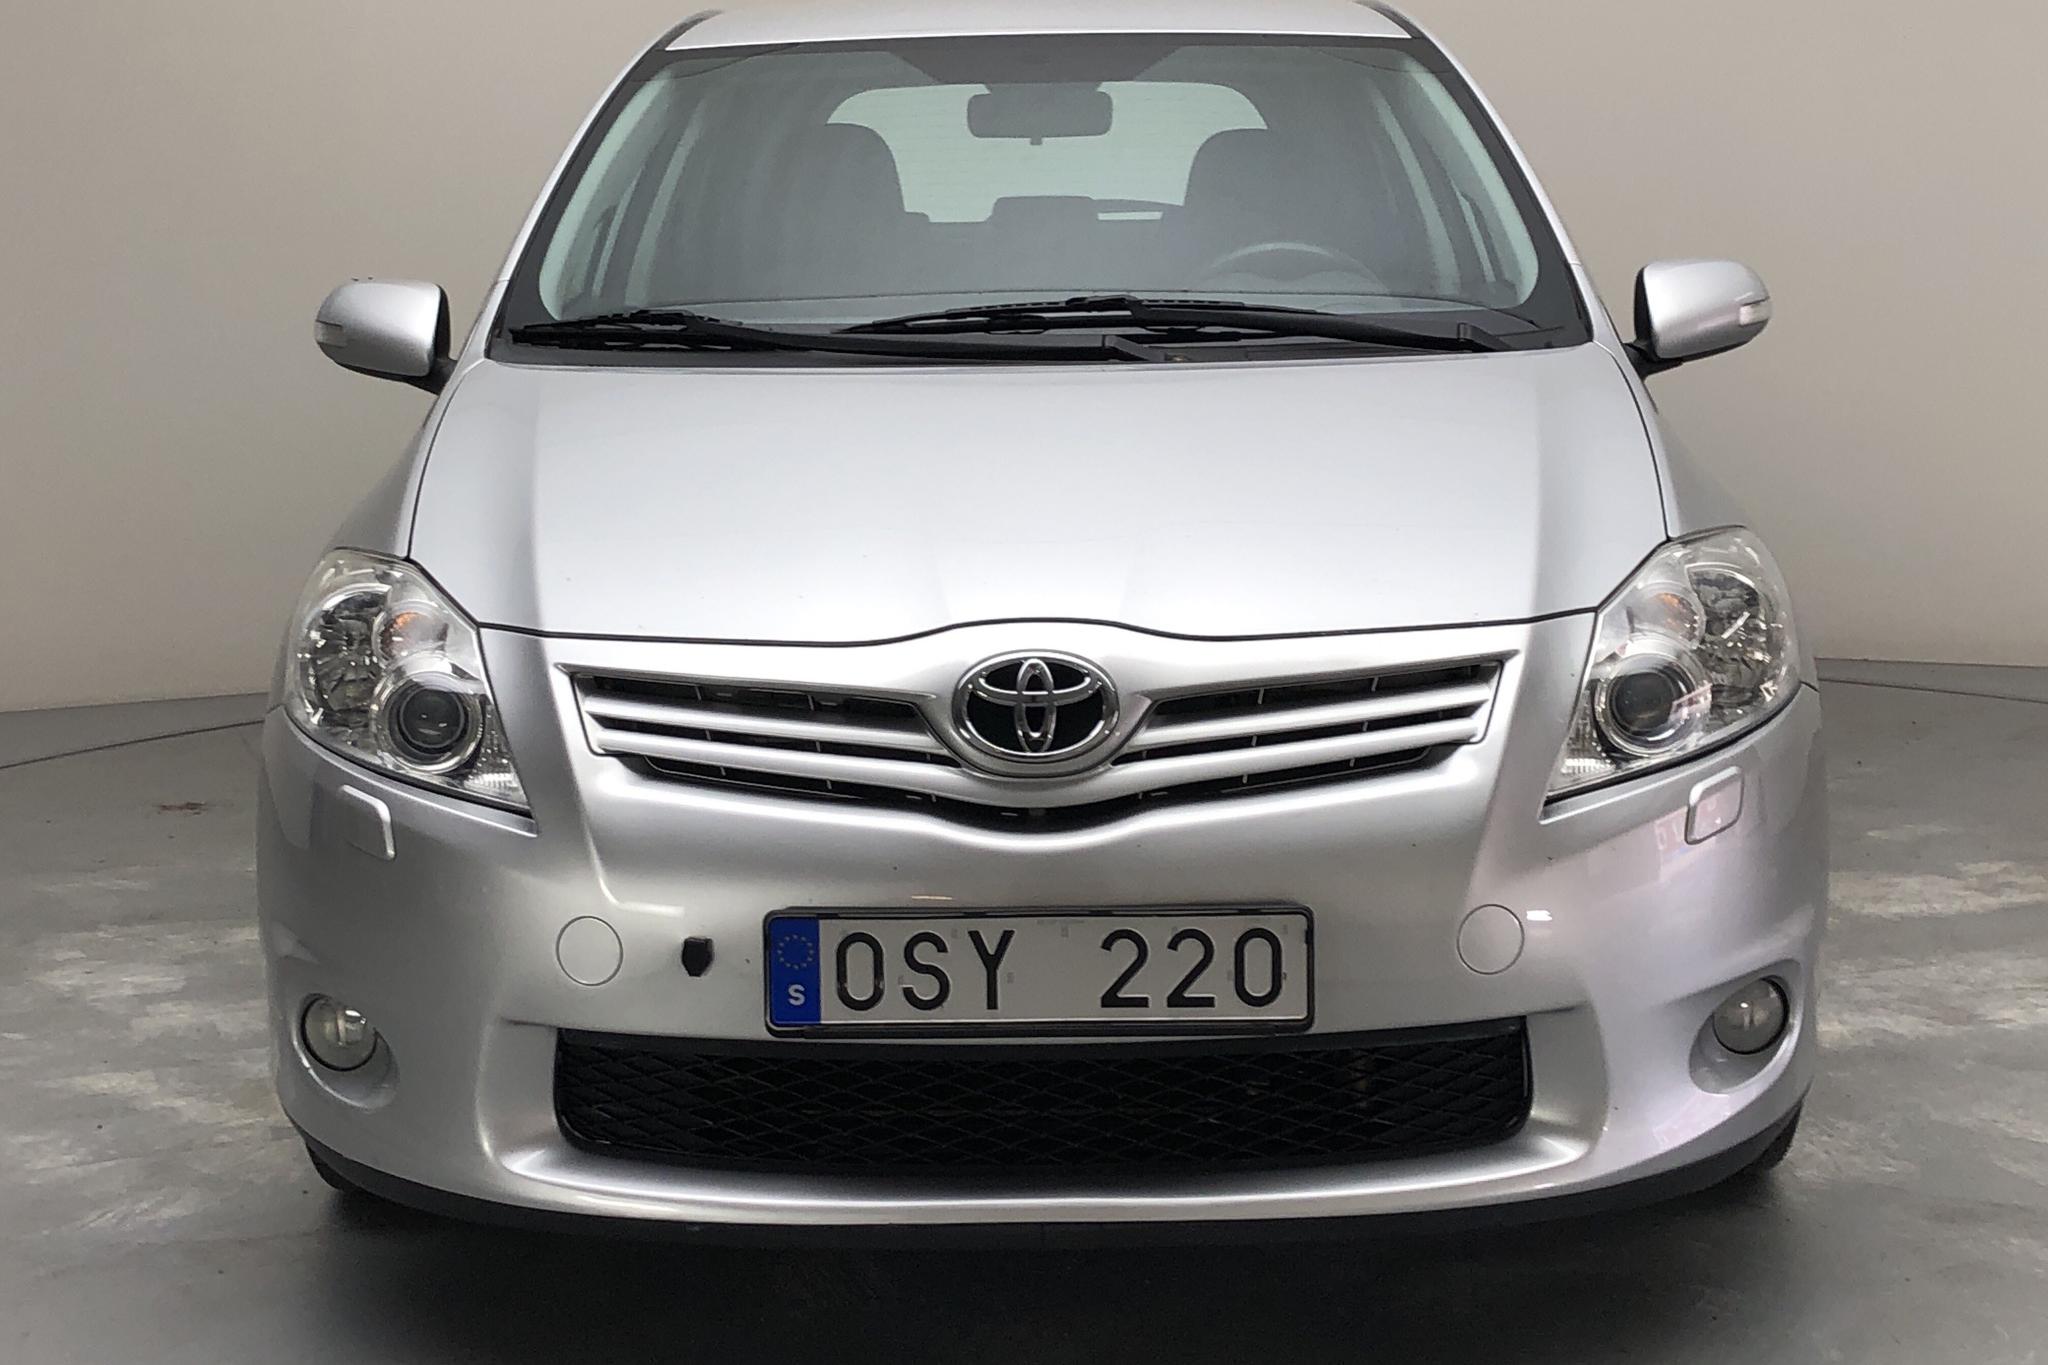 Toyota Auris 1.6 VVT-i 5dr (132hk) - 89 190 km - Automatic - silver - 2010